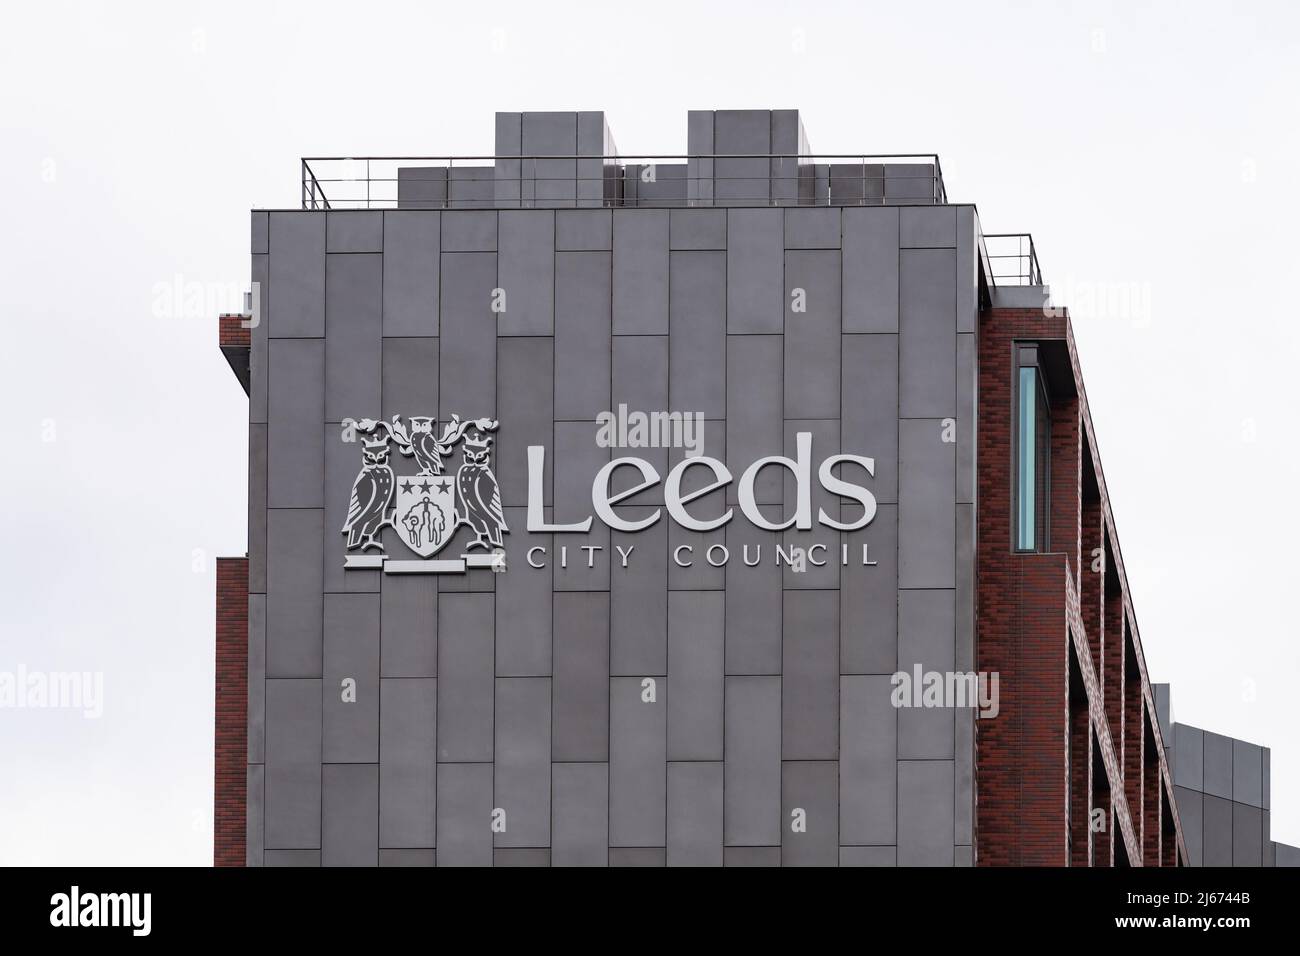 Leeds City Council sign, Merrion House, Leeds, England, UK Stock Photo